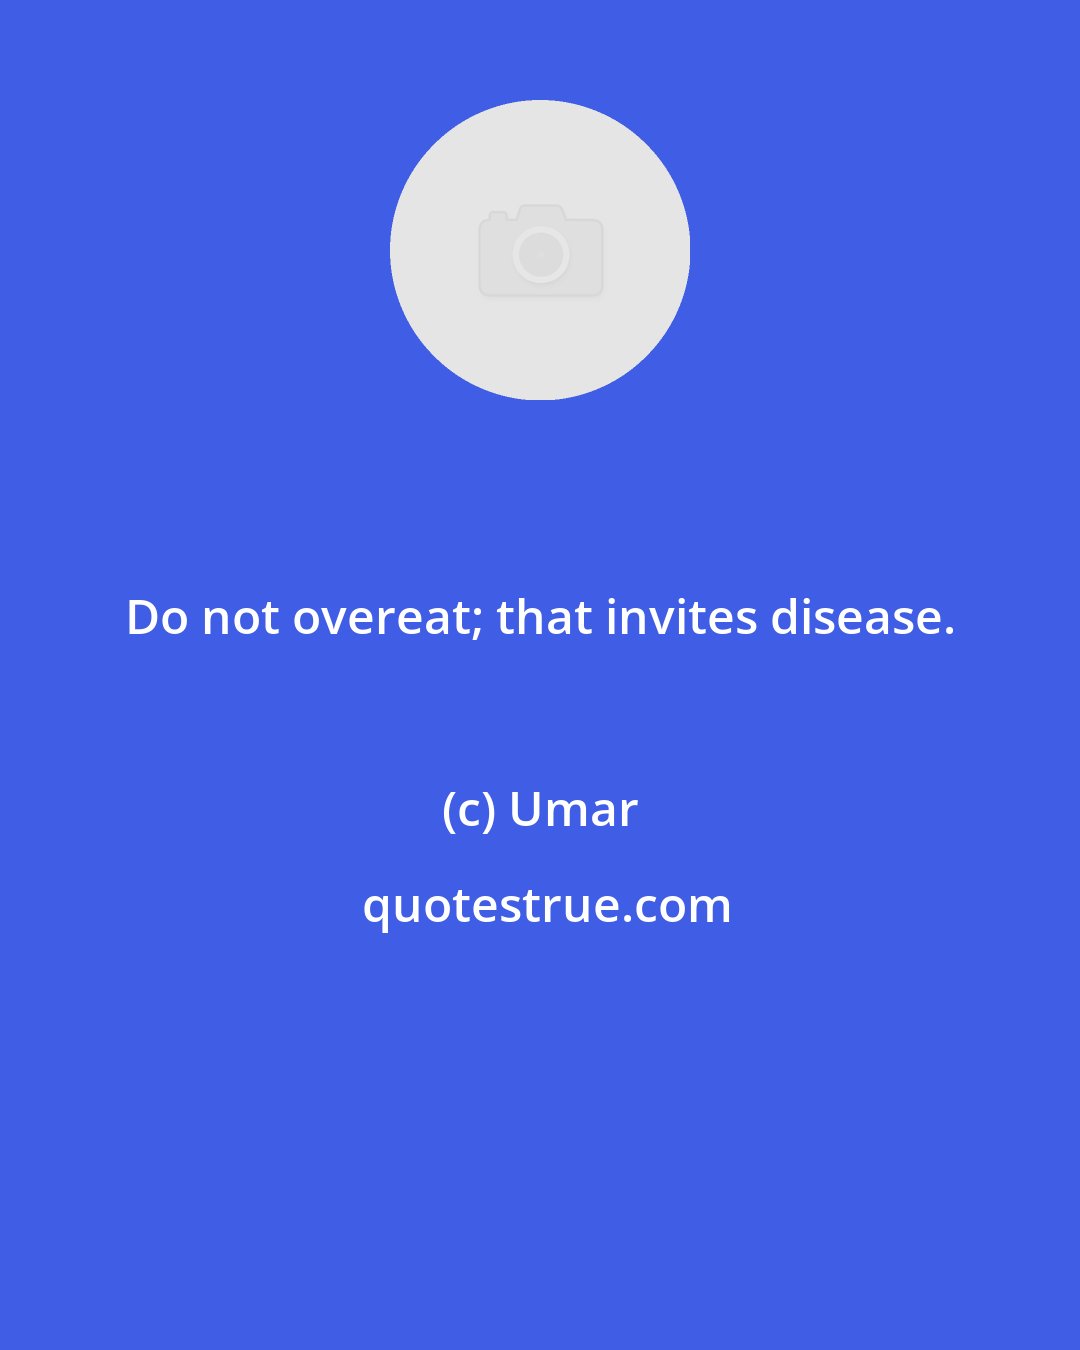 Umar: Do not overeat; that invites disease.